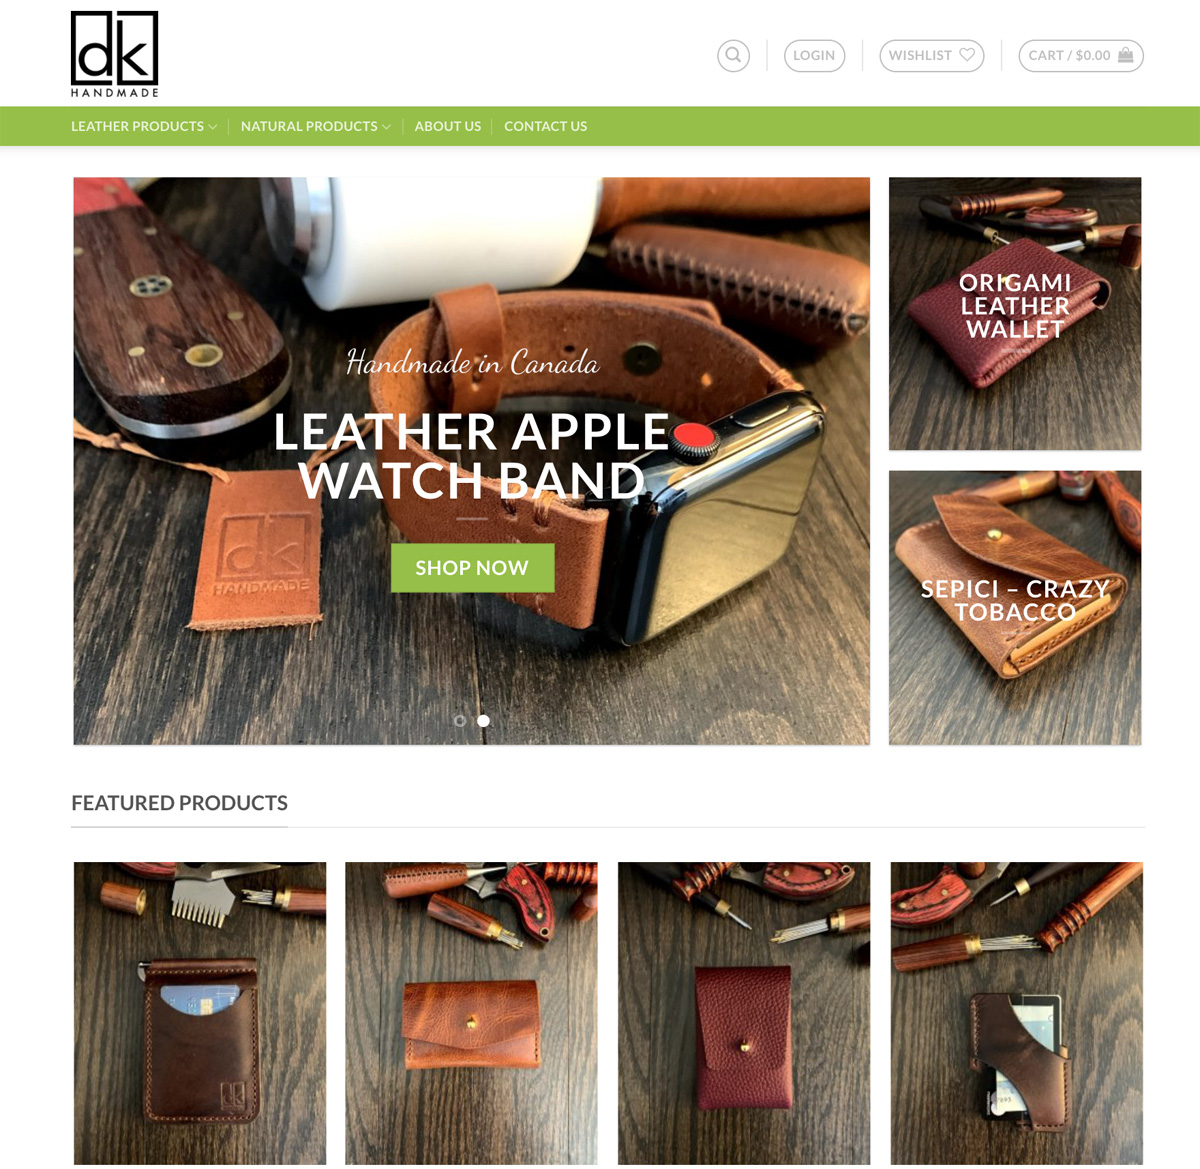 DK handmade – a leather goods brand designed and handmade